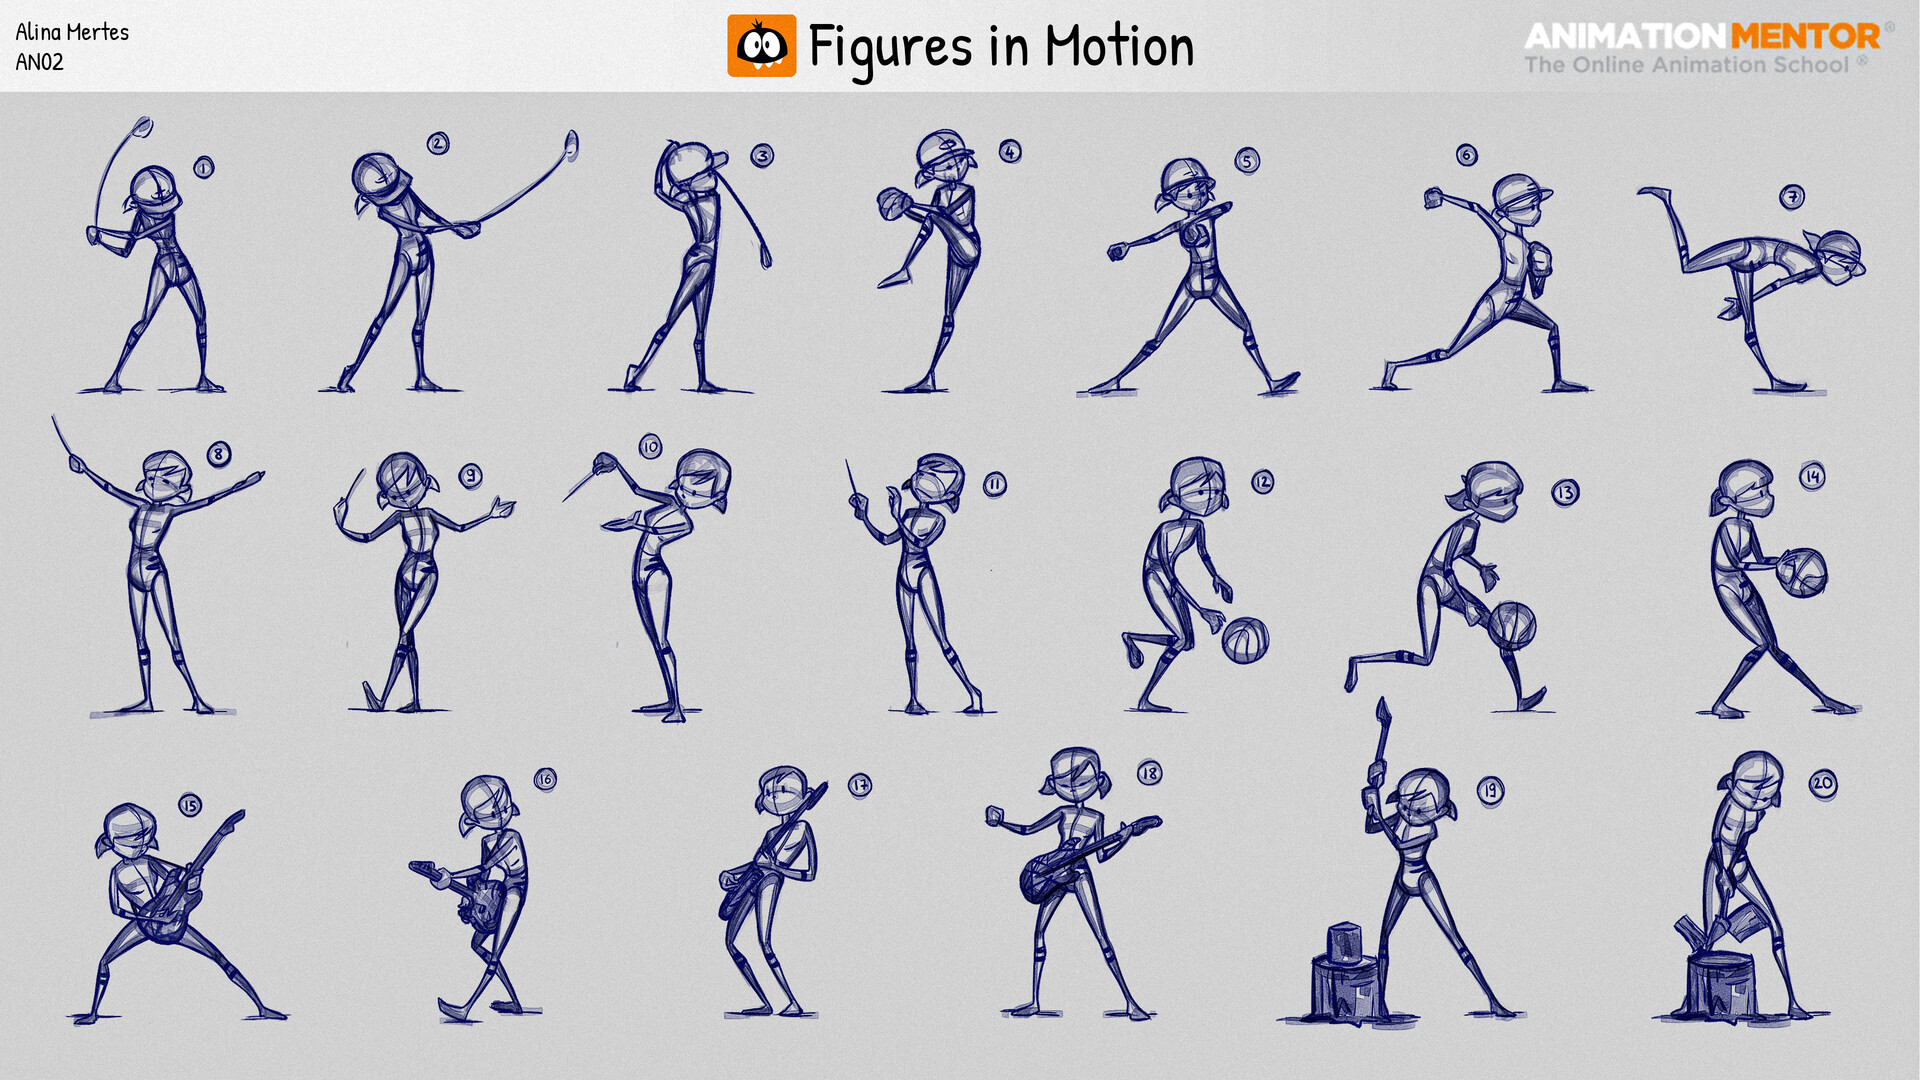 ArtStation - Animation Mentor - Figures in Motion Sketch